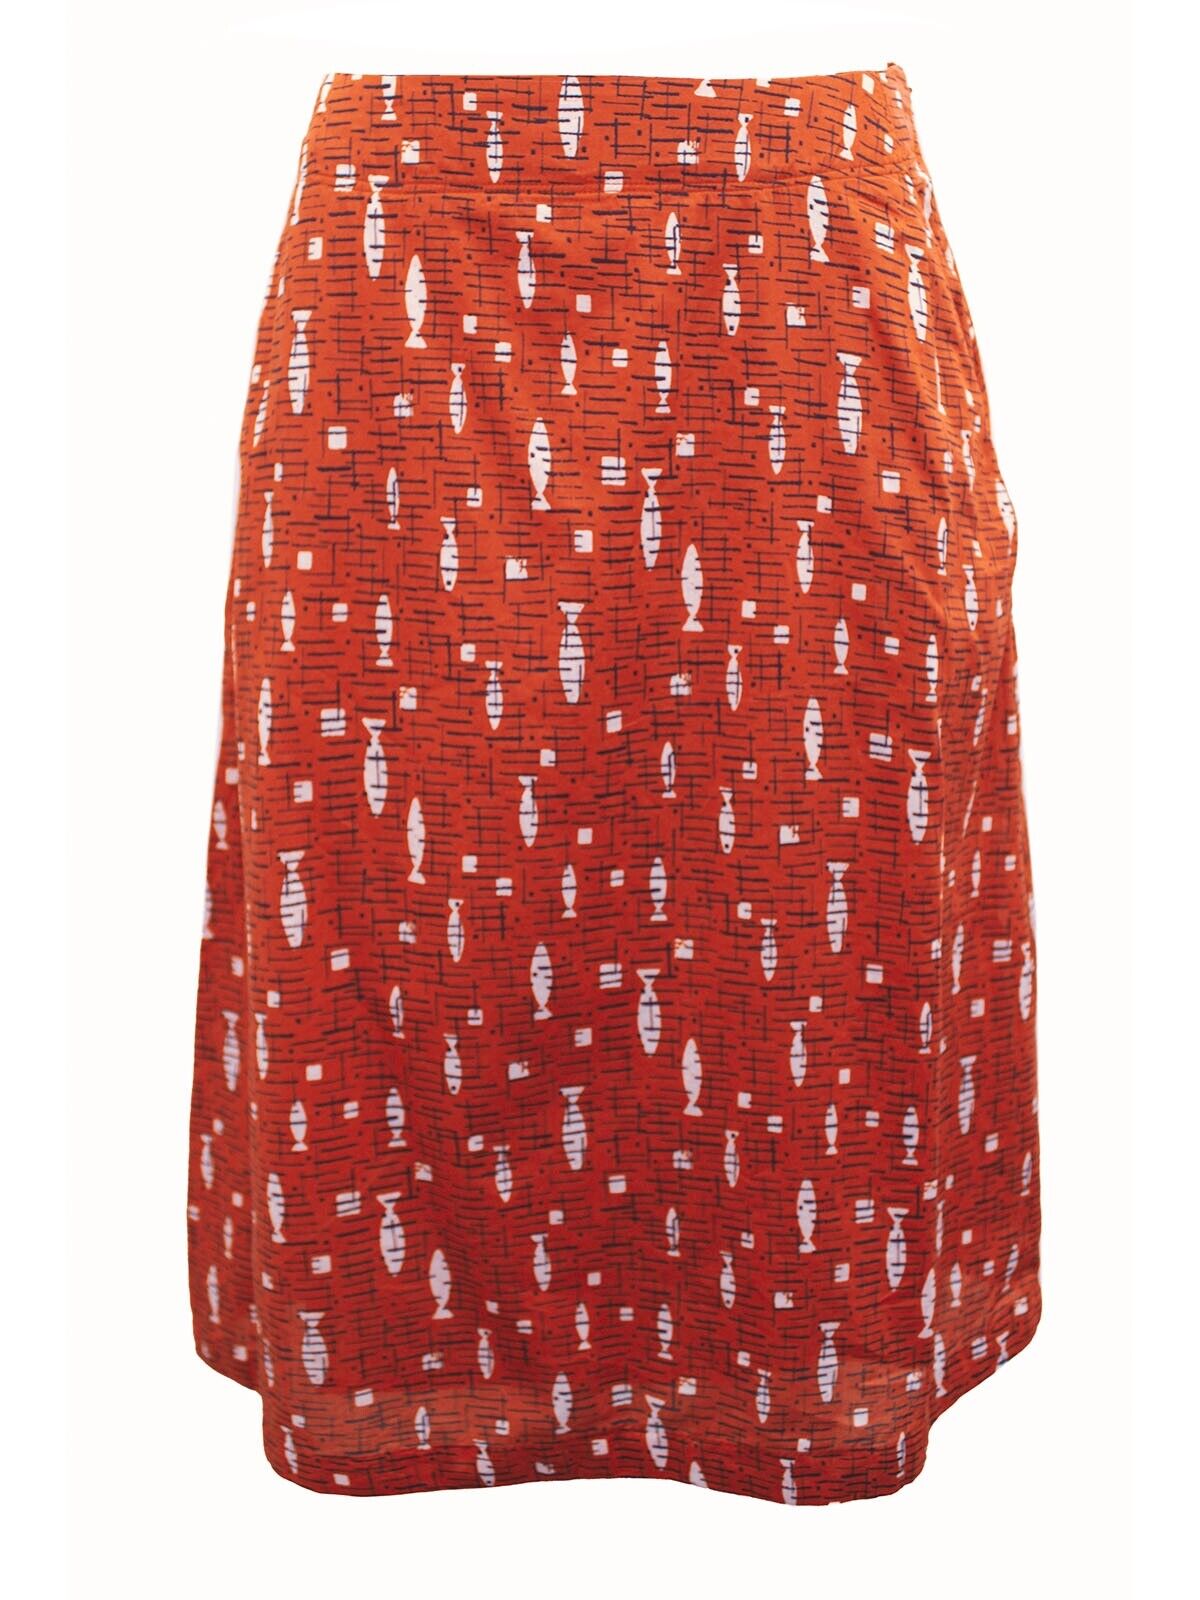 EX Seasalt Brick Red Paint Pot Skirt in Size 20 see description for measurements